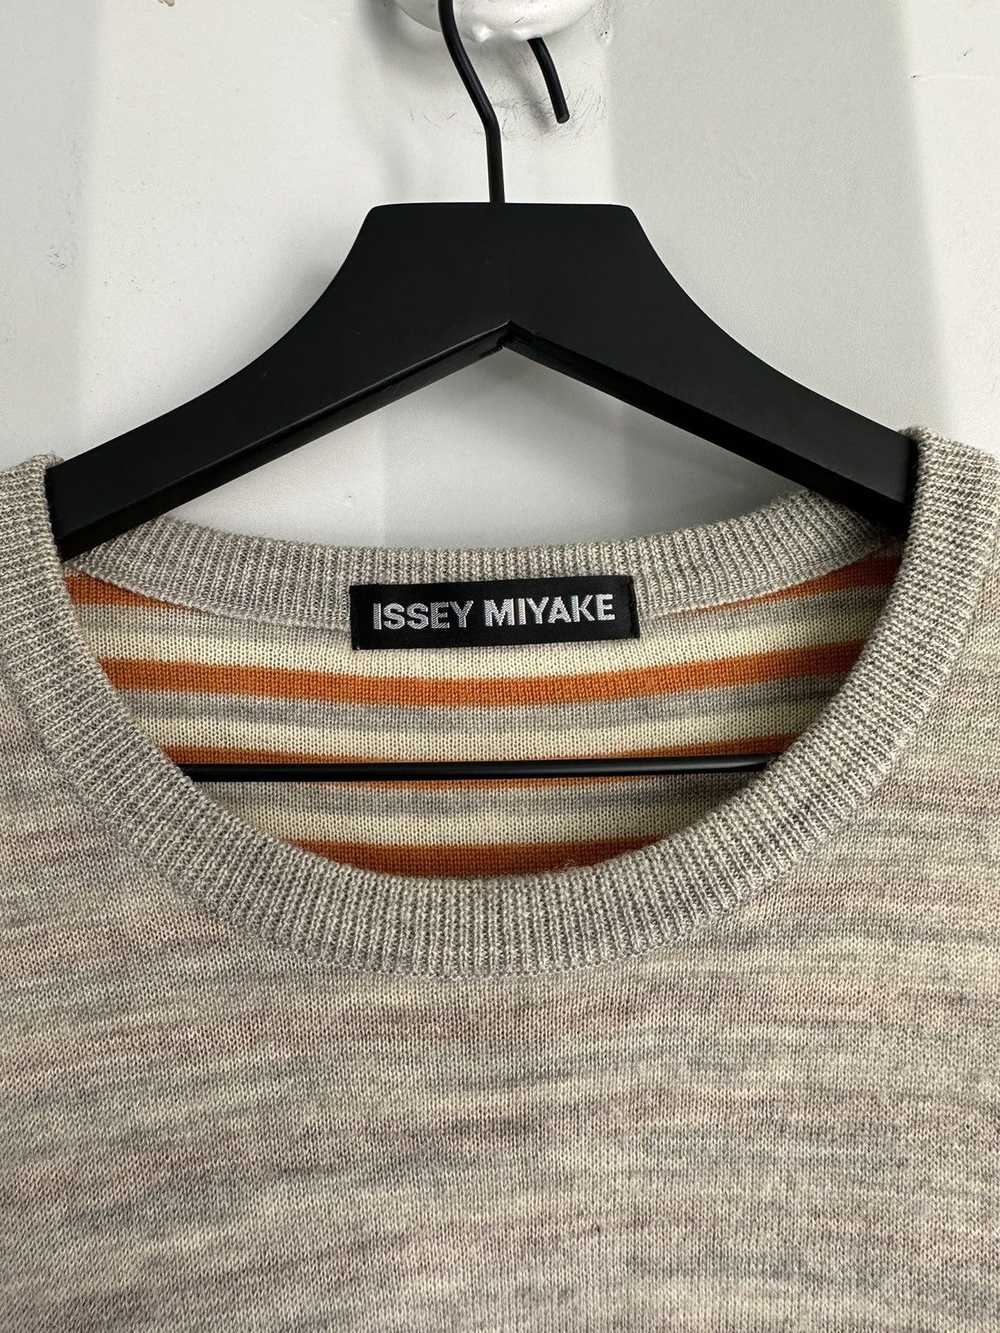 Issey Miyake Double Layered Sweater Shirt - image 5